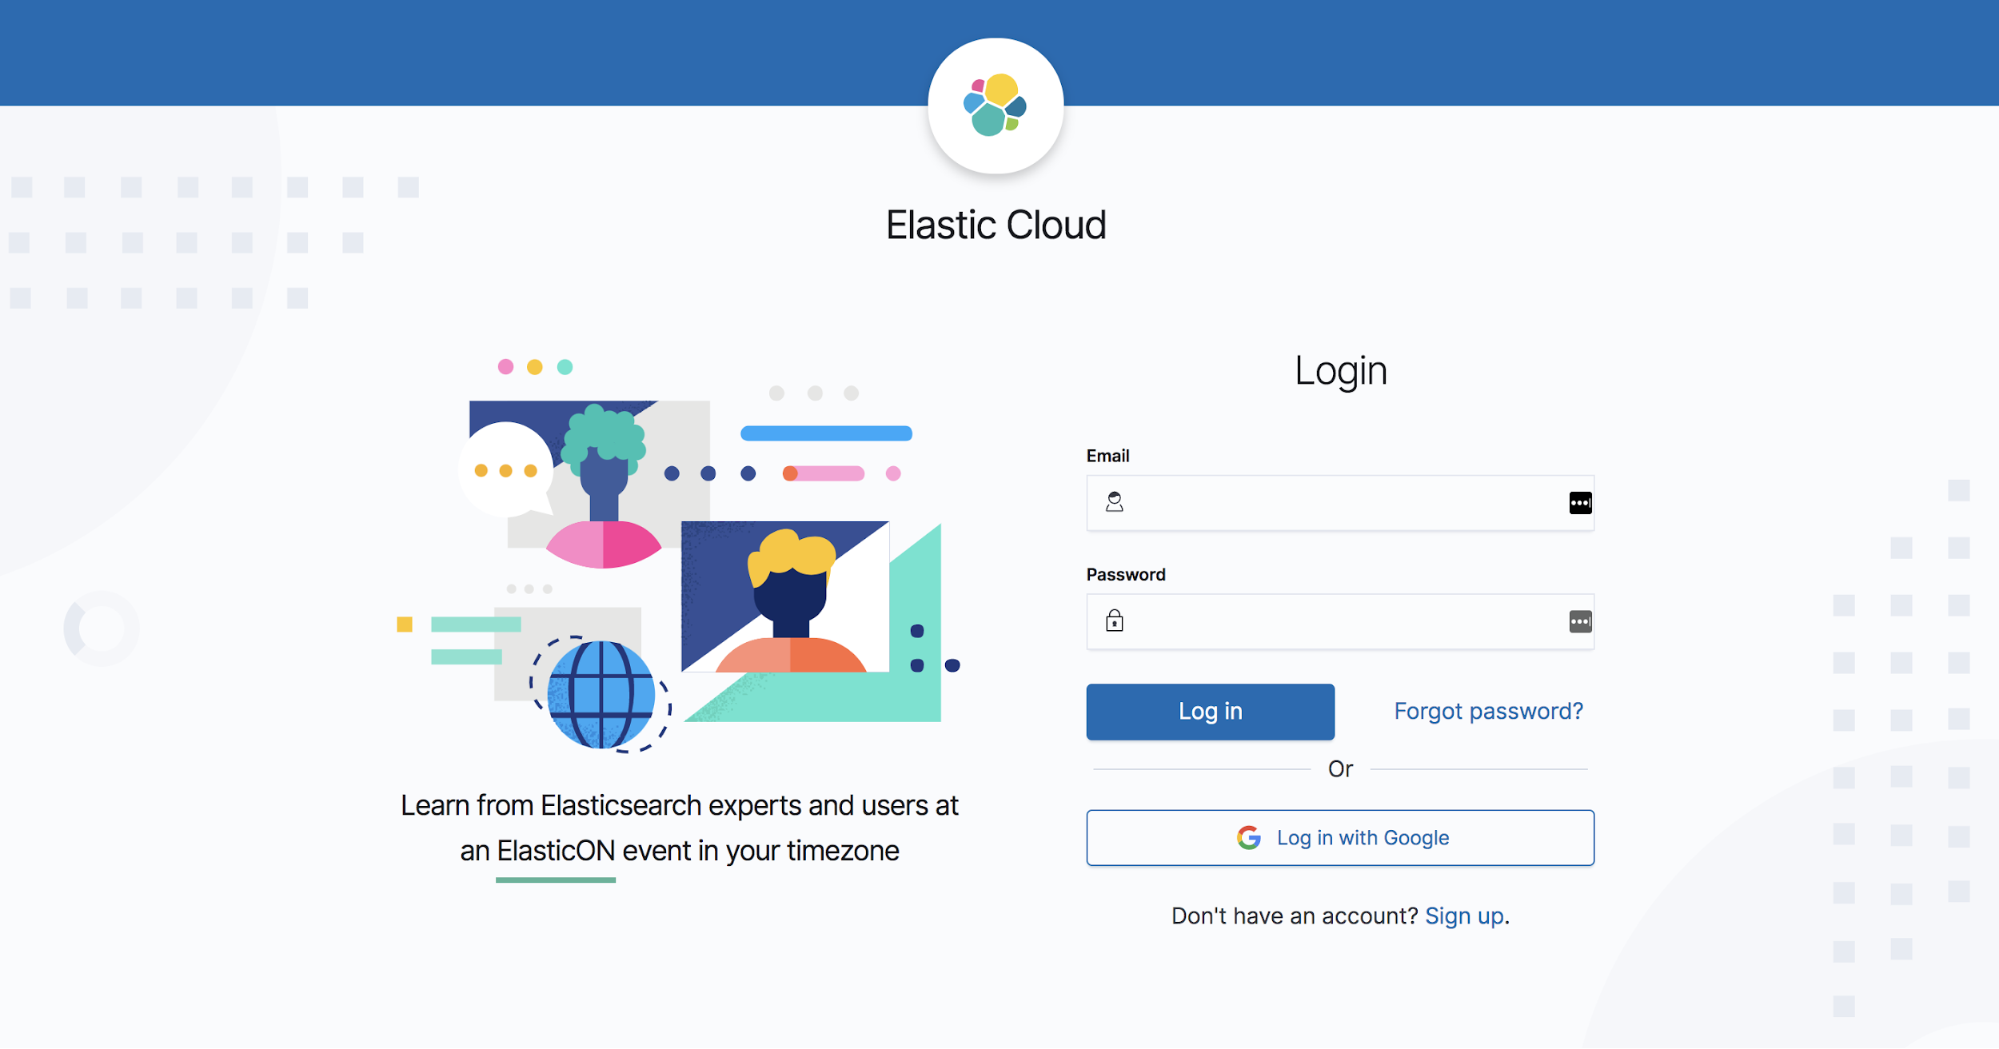 The Elastic Cloud login screen